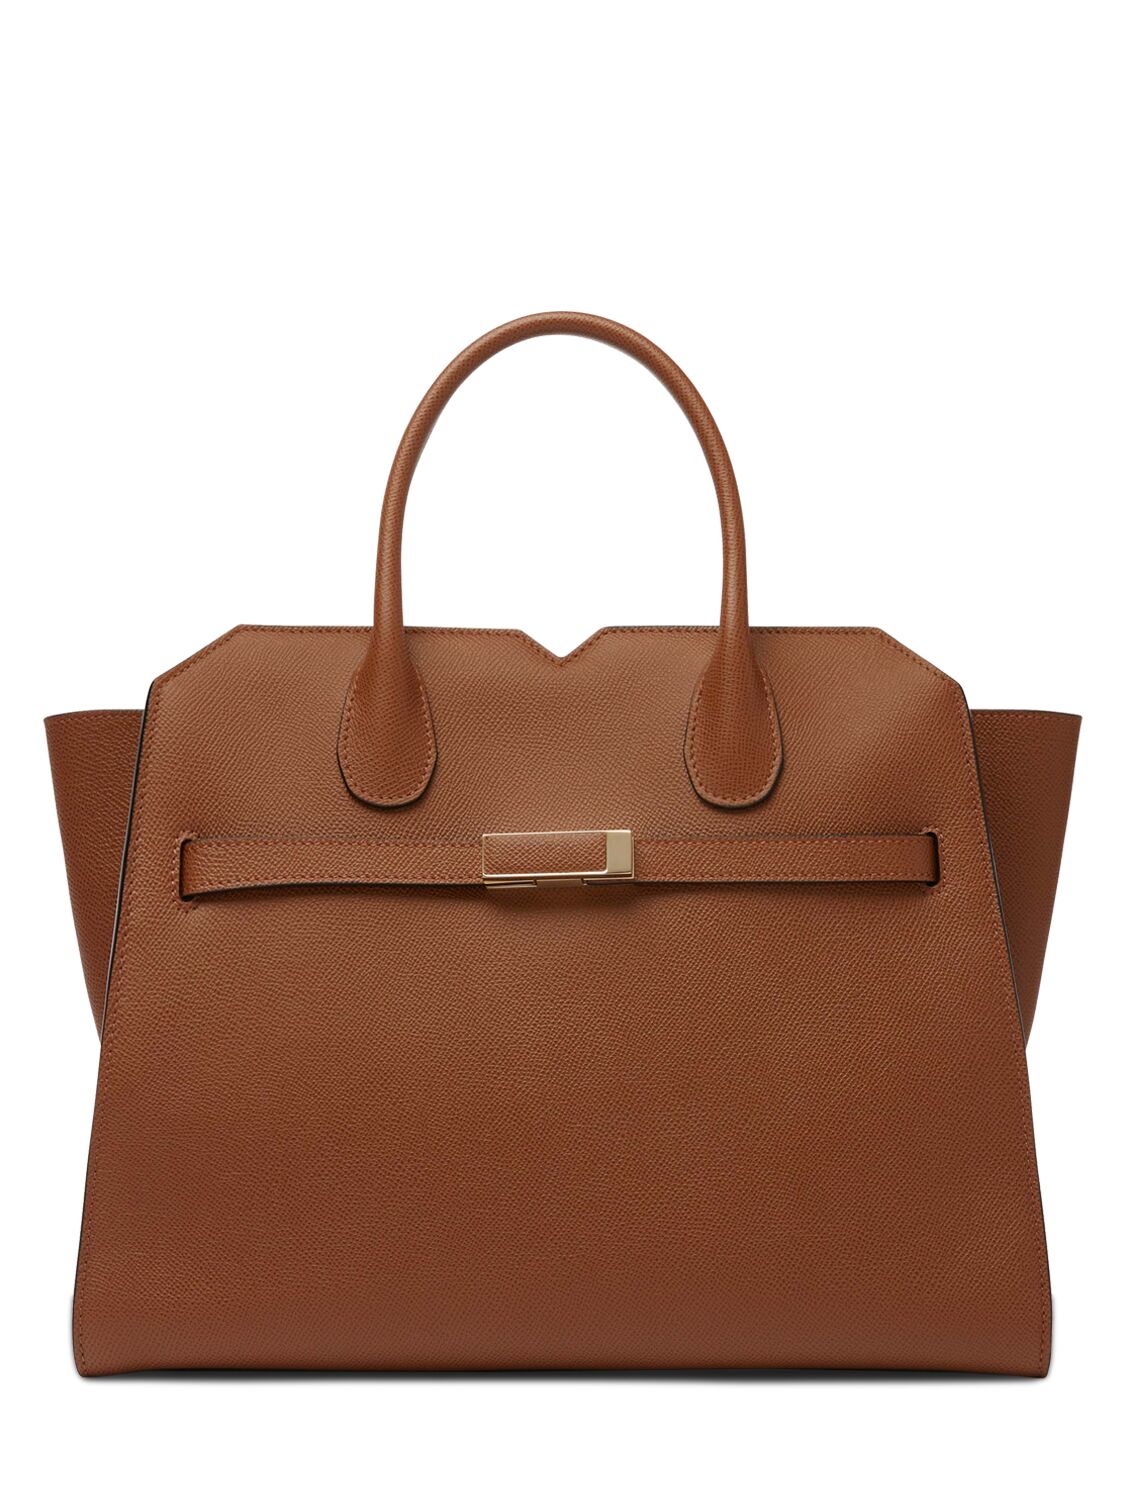 Image of Medium Milano Leather Tote Bag